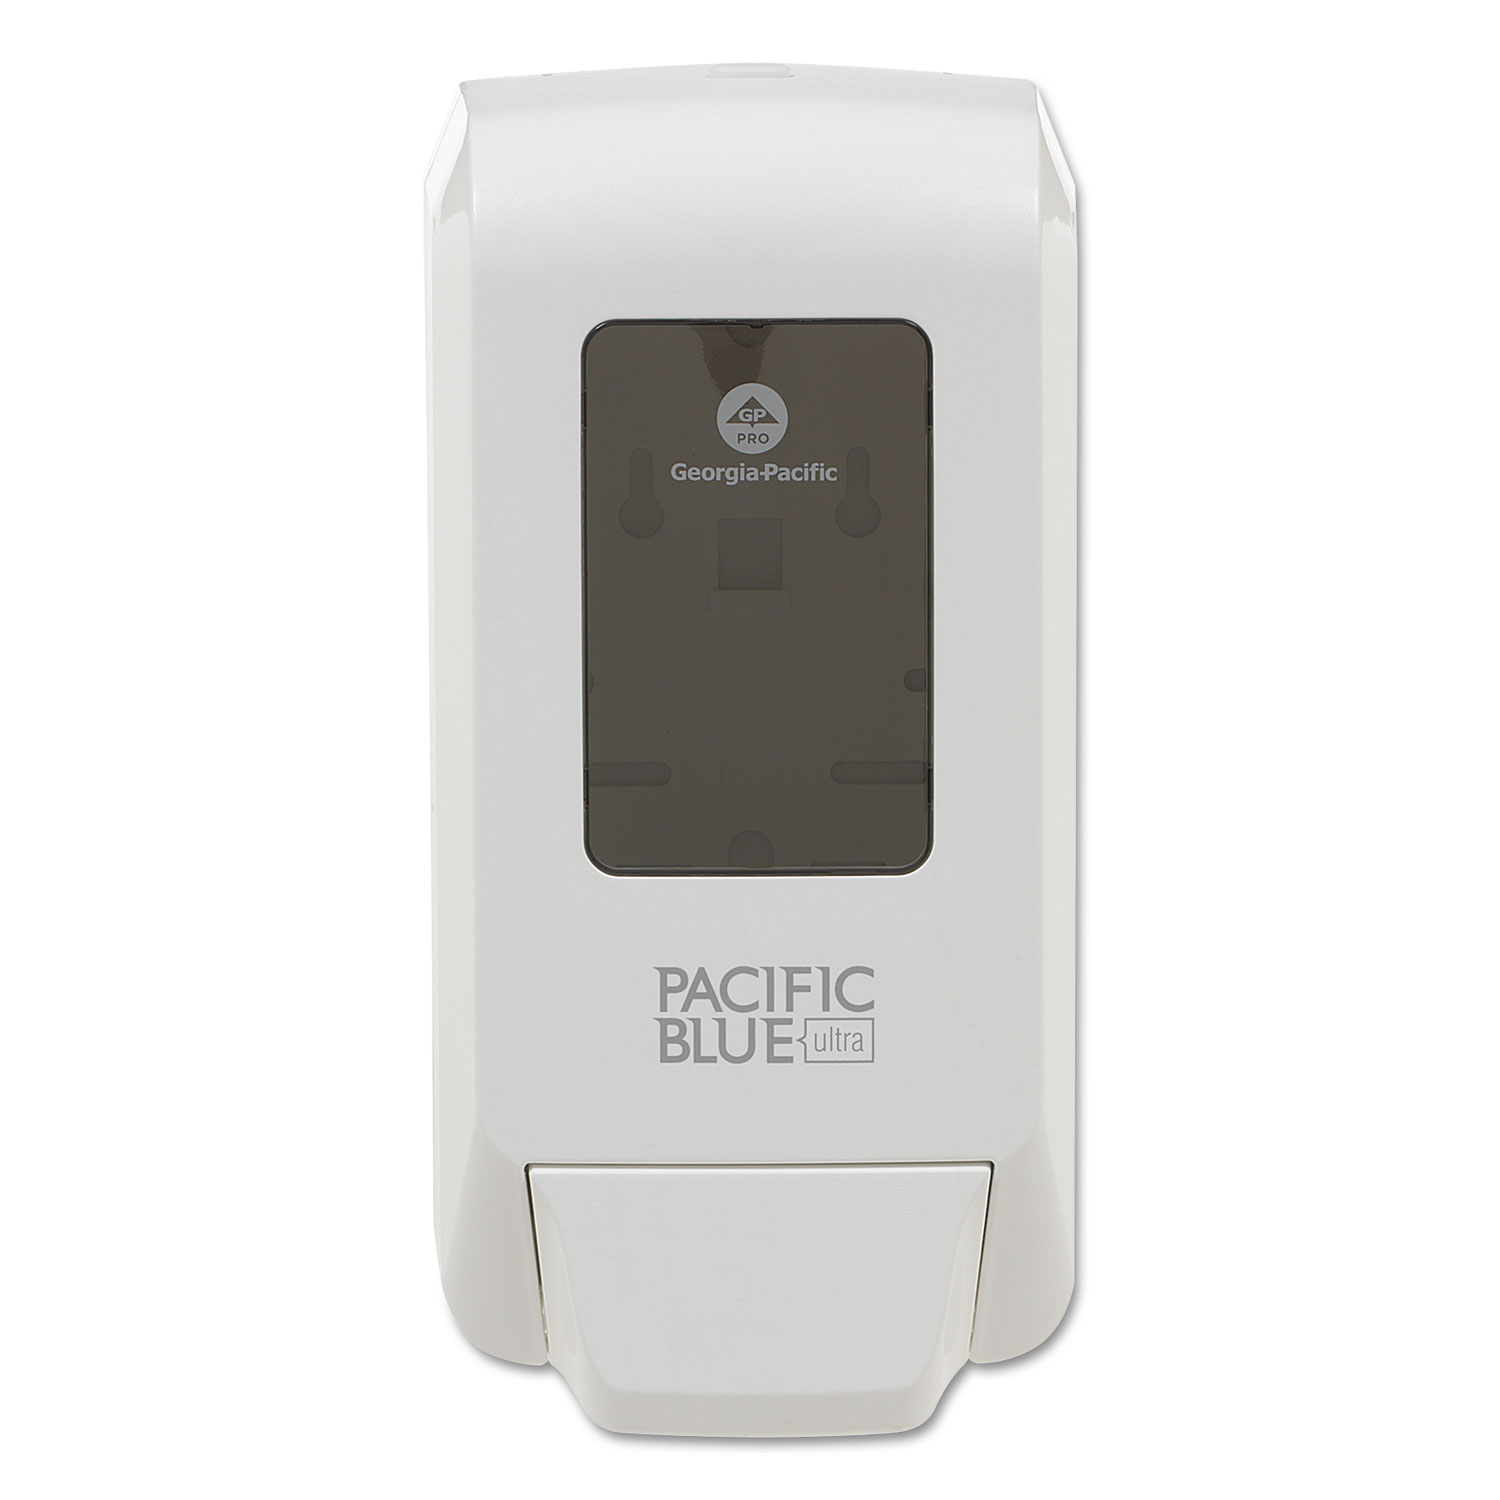  Georgia Pacific Professional 53058 Pacific Blue Ultra Soap/Sanitizer Dispenser, 1200 mL, White (GPC53058) 